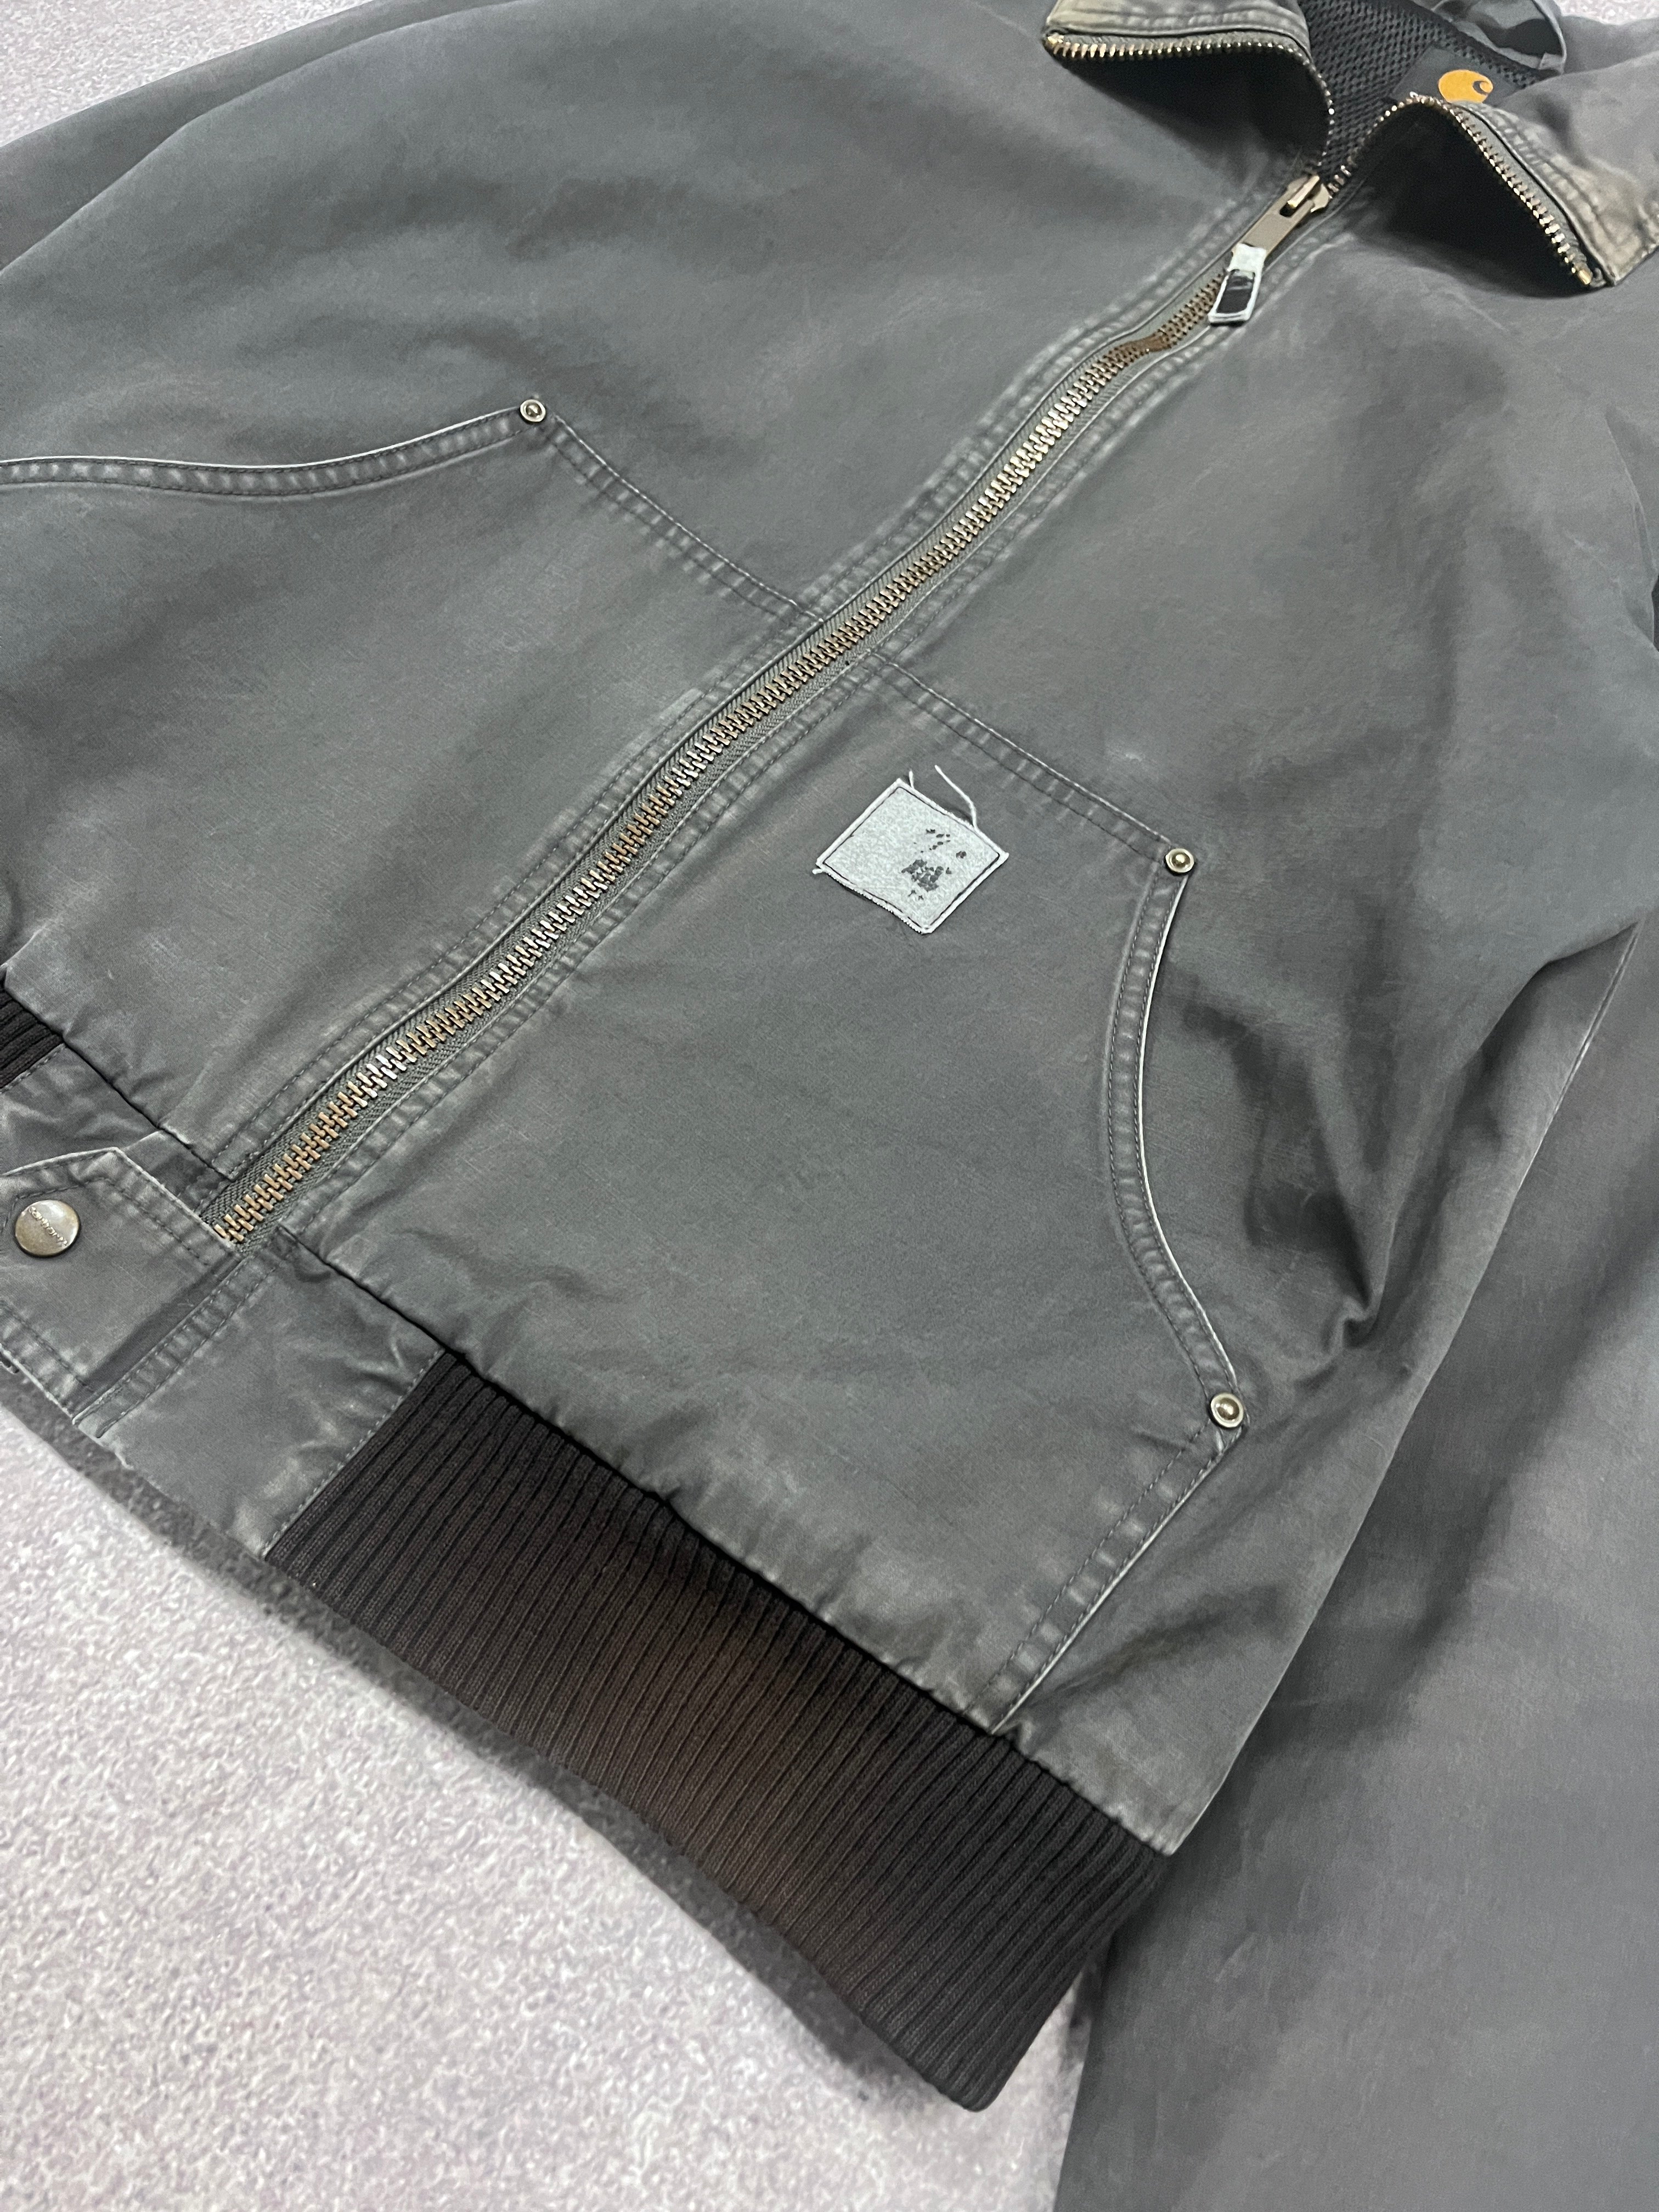 Vintage Carhartt Workwear Jacket Grey // Medium - RHAGHOUSE VINTAGE